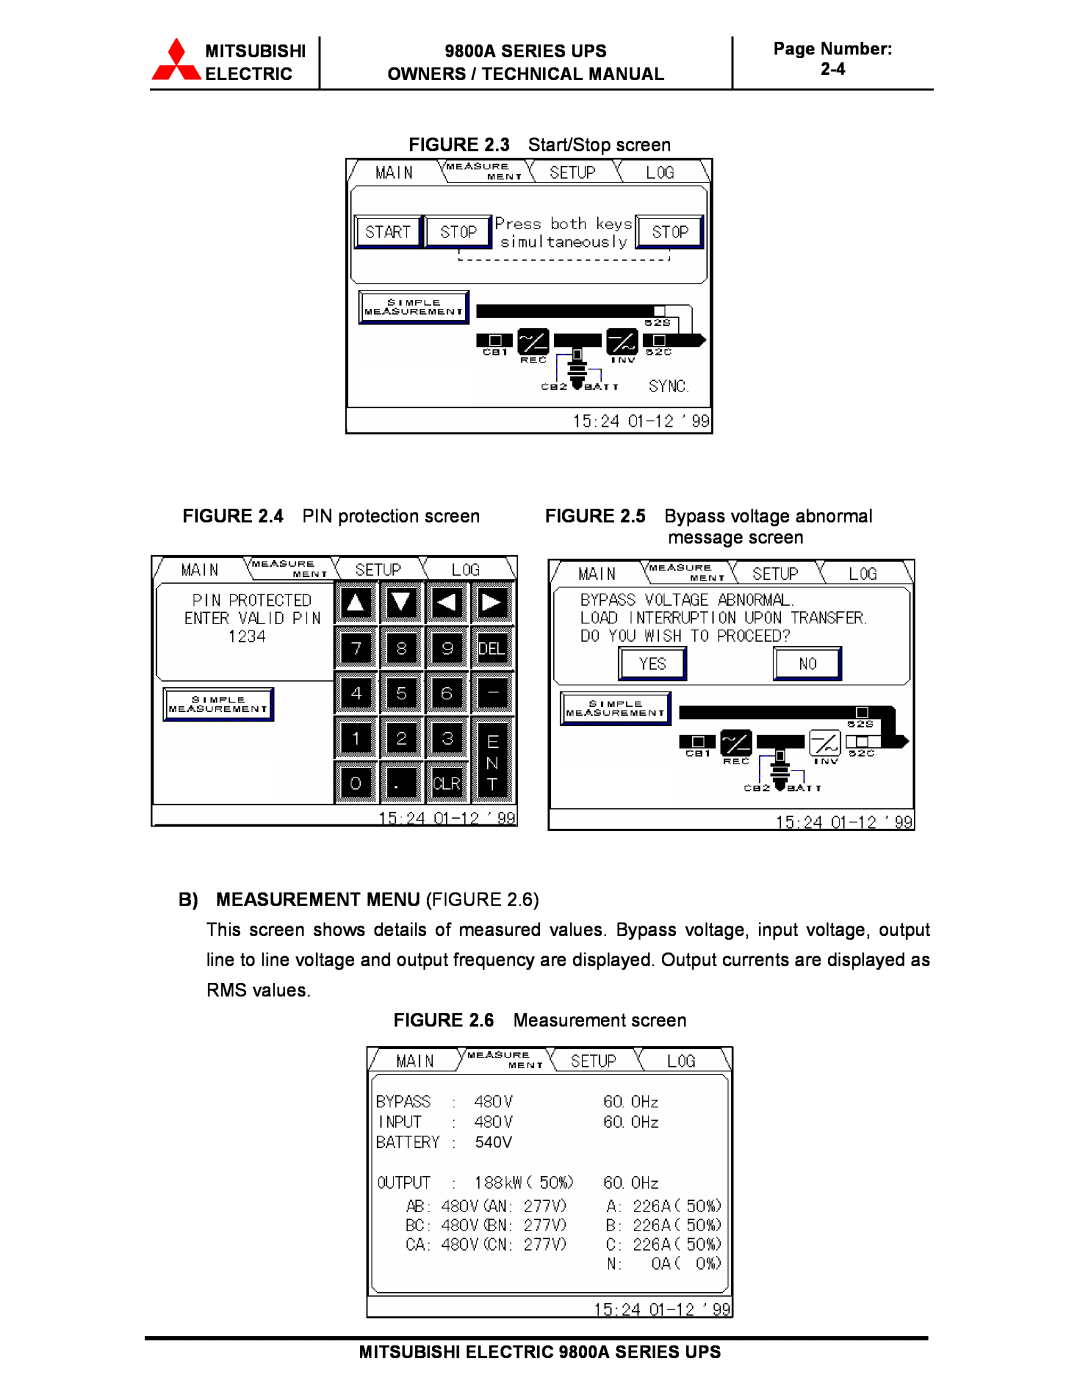 Mitsubishi 9800A Series technical manual B Measurement Menu Figure 